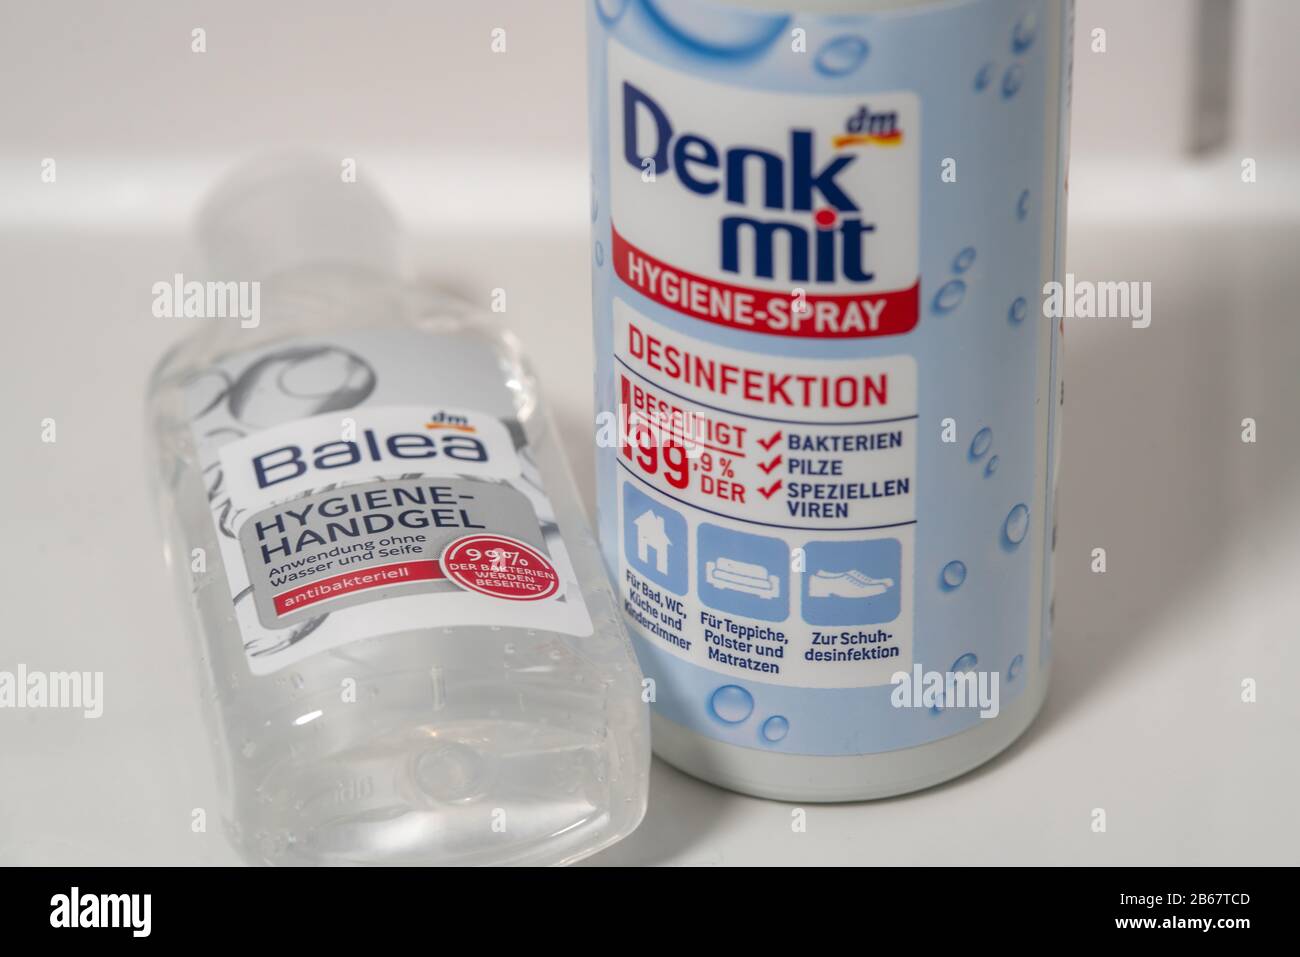 Domestic hygiene, washing hands, hygiene hand gel, disinfection spray, Stock Photo